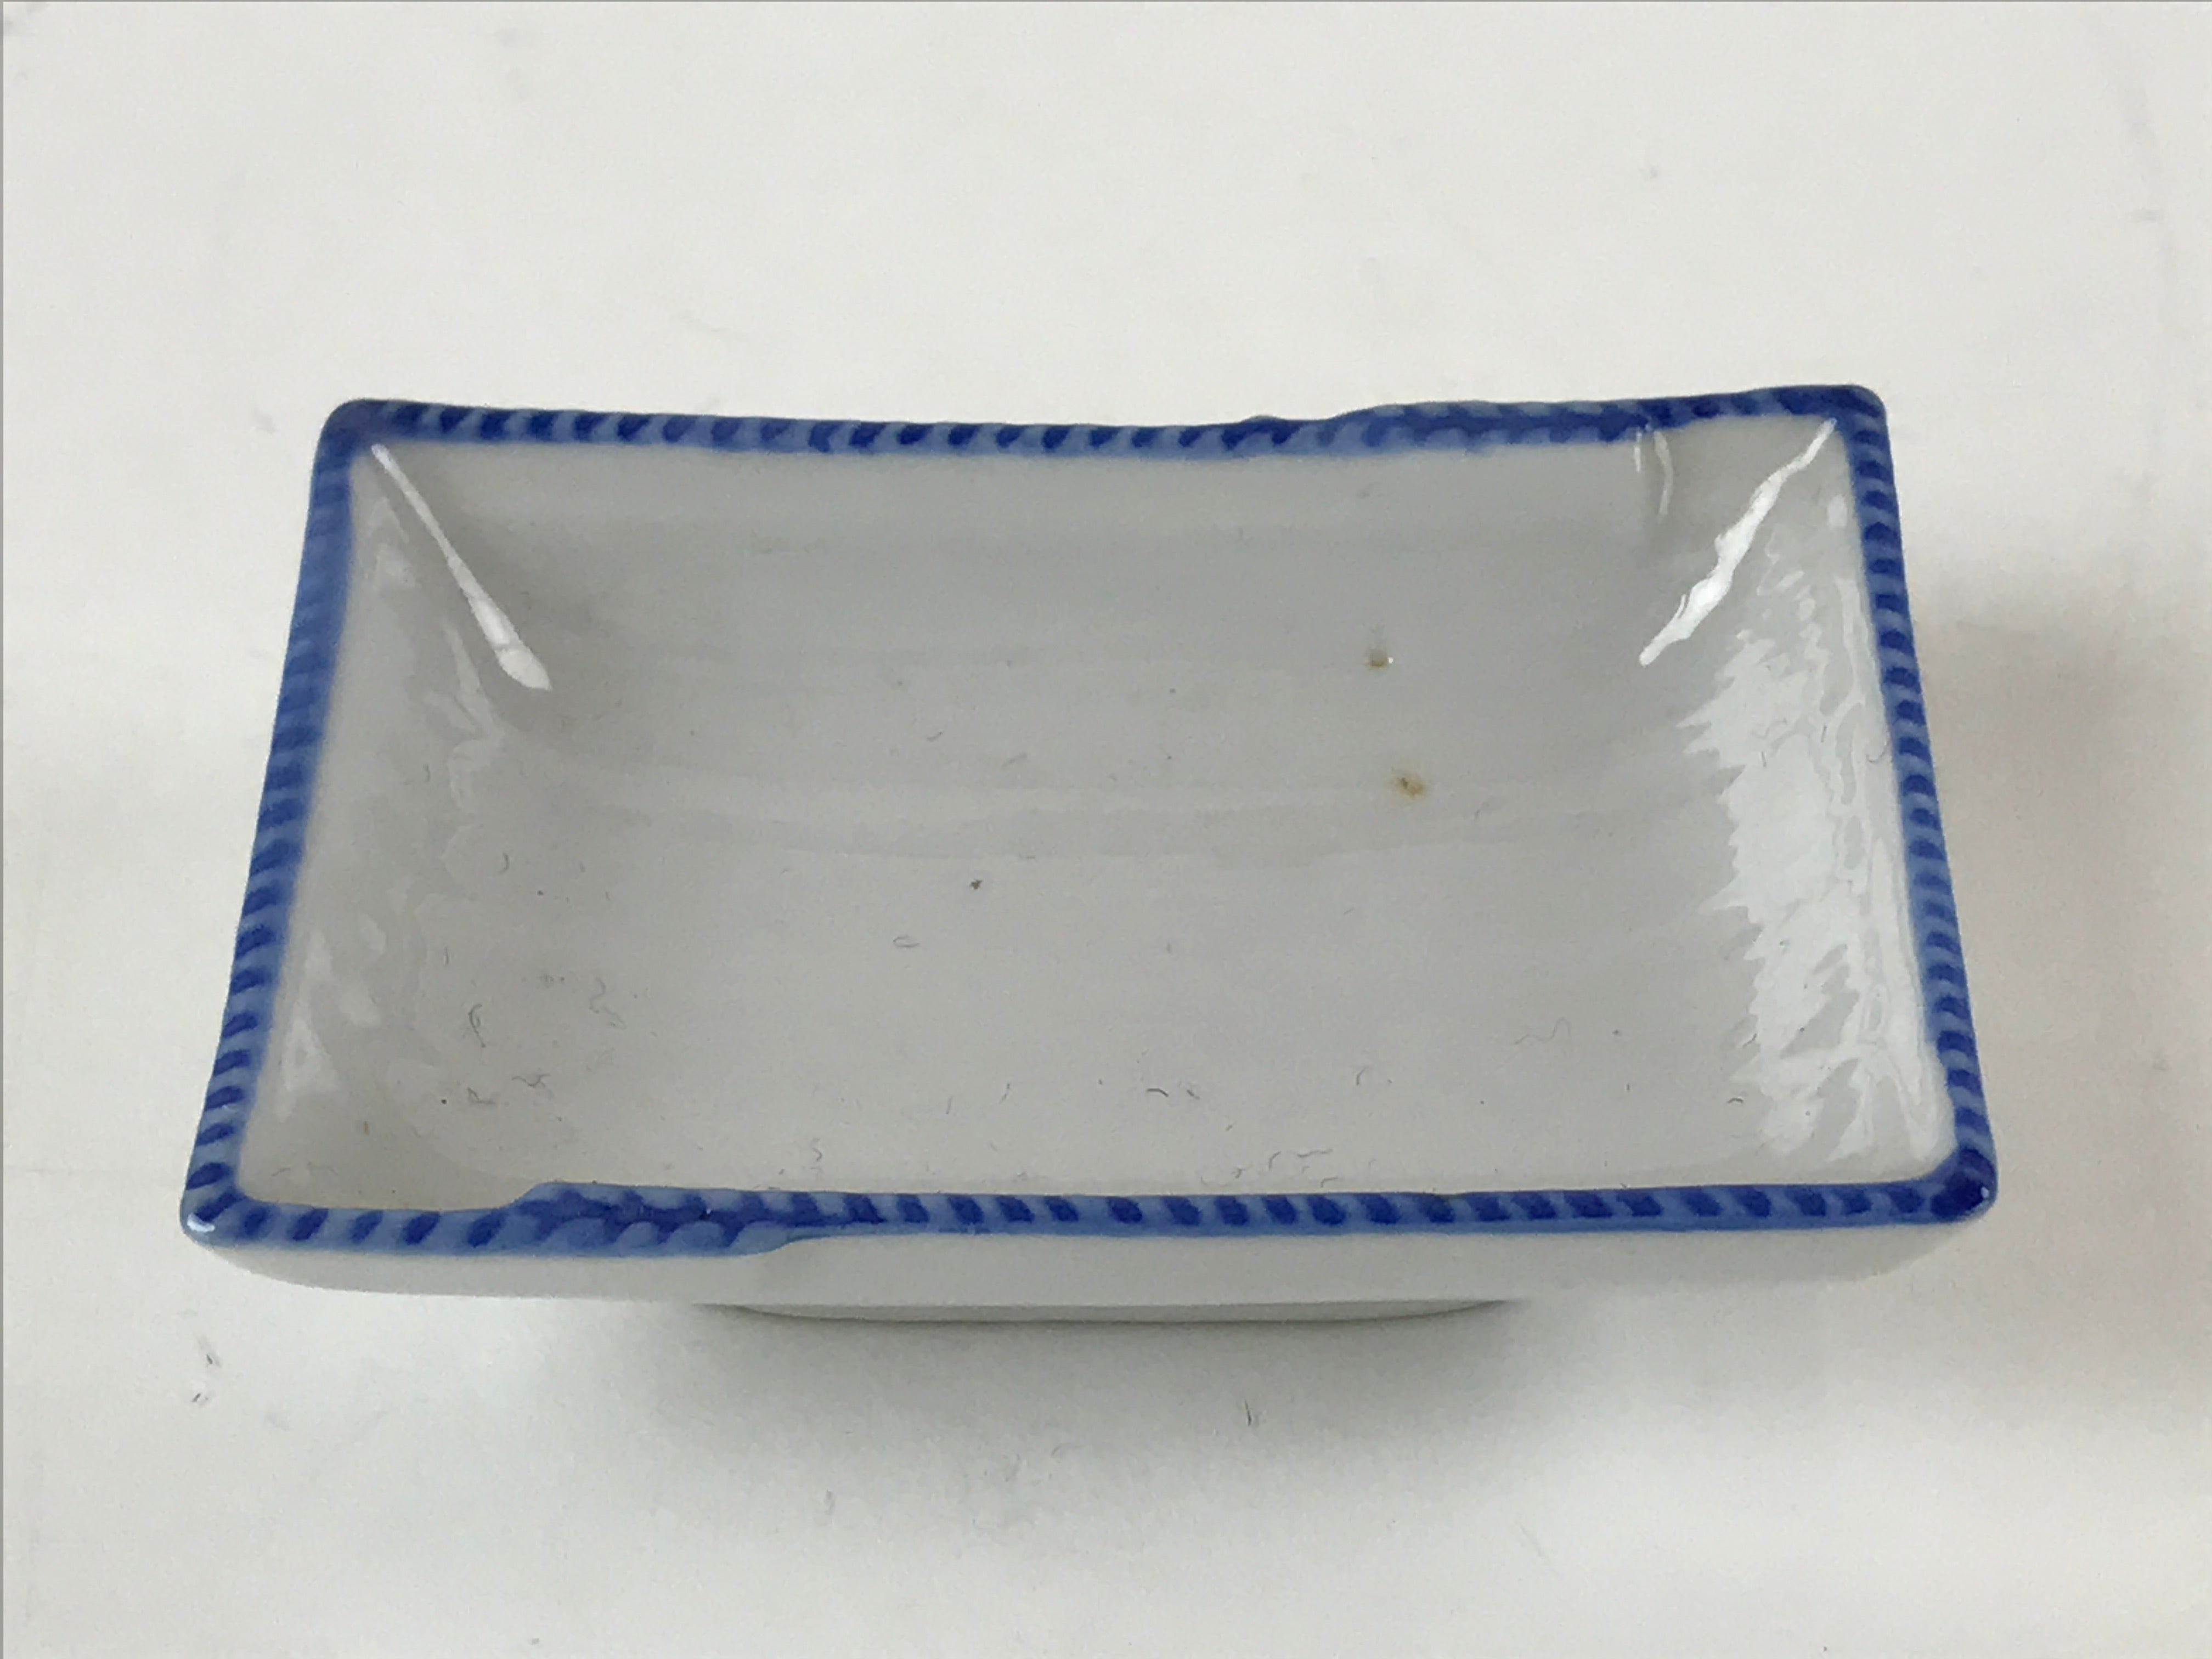 Japanese Porcelain Soy Sauce Dish Seiji Vtg Small Dipping Bowl Plate Blue PY647